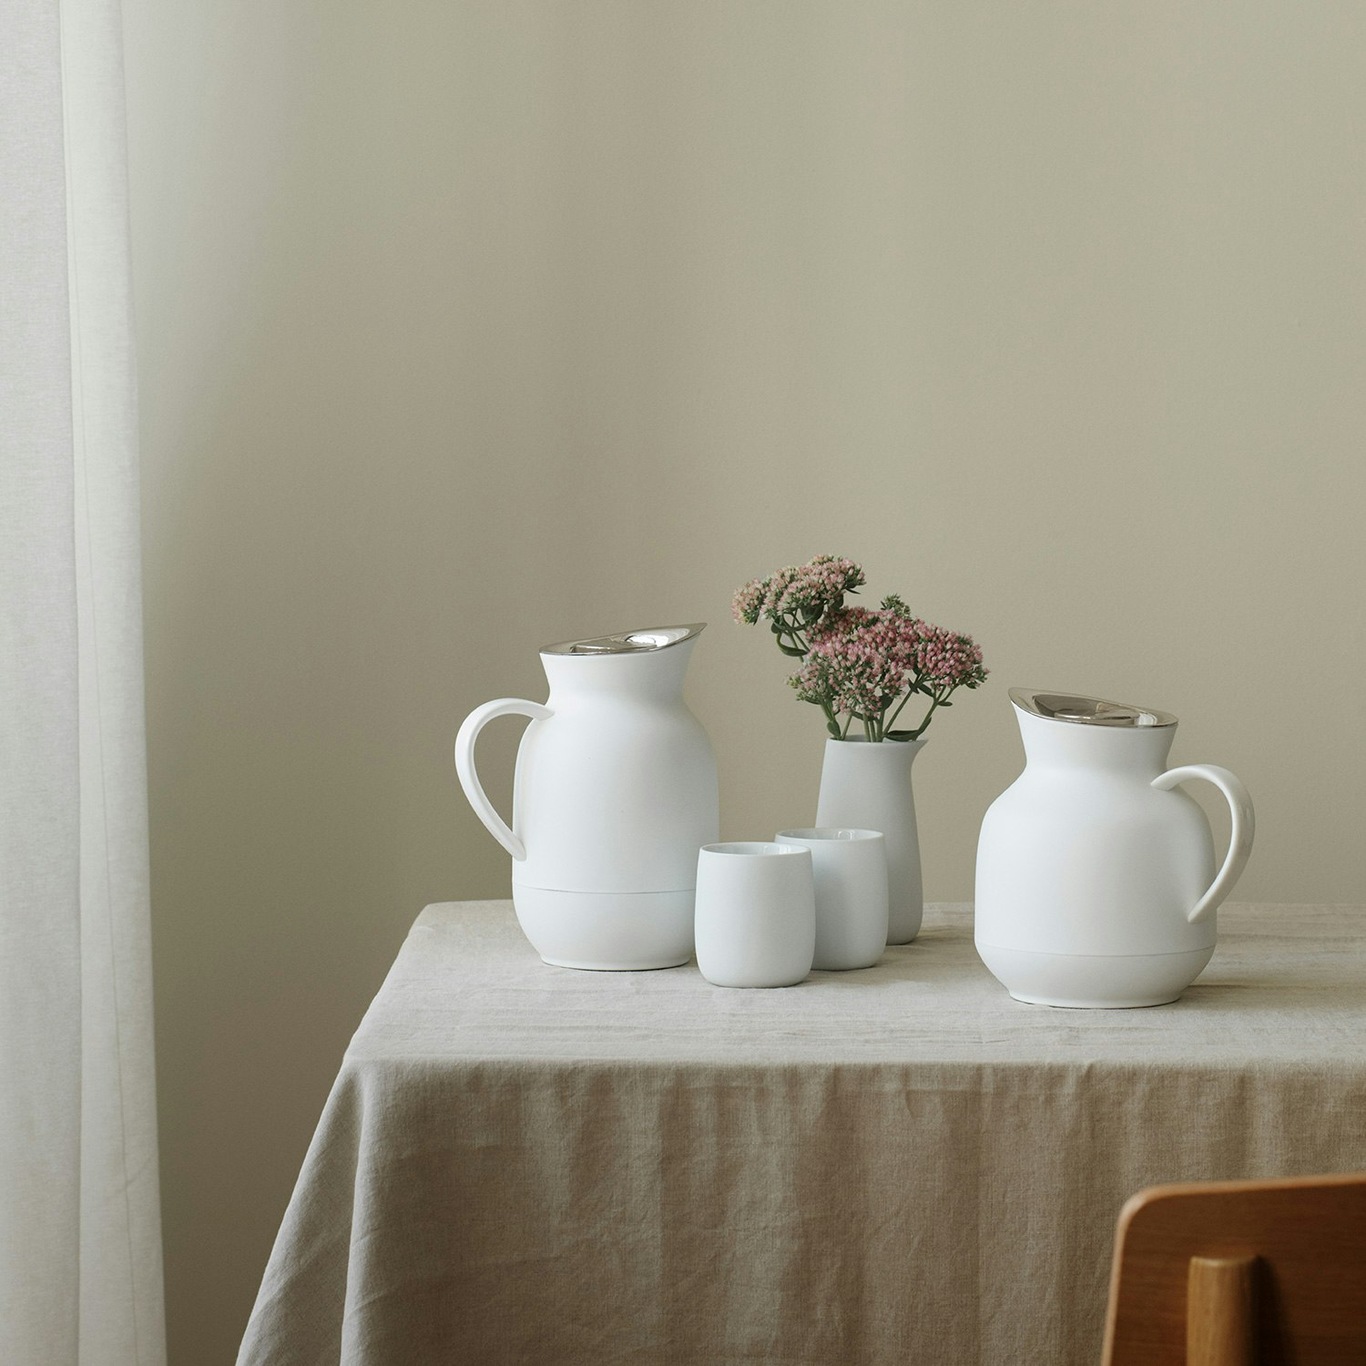 https://royaldesign.com/image/2/stelton-amphora-teapot-1-l-2?w=800&quality=80